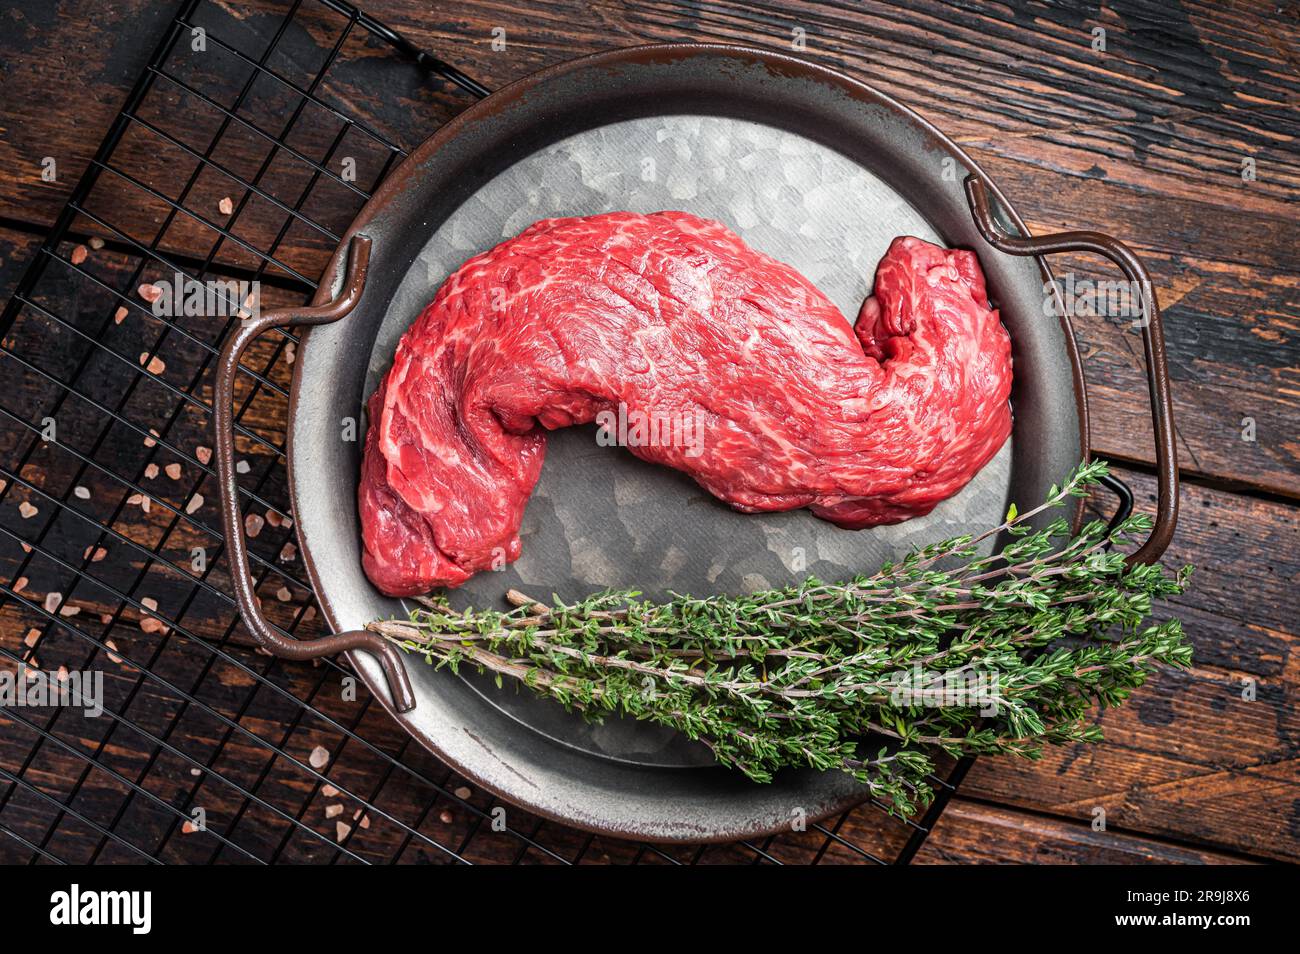 Raw uncooked Machete beef meat steak, skirt steak. Wooden background. Top view. Stock Photo